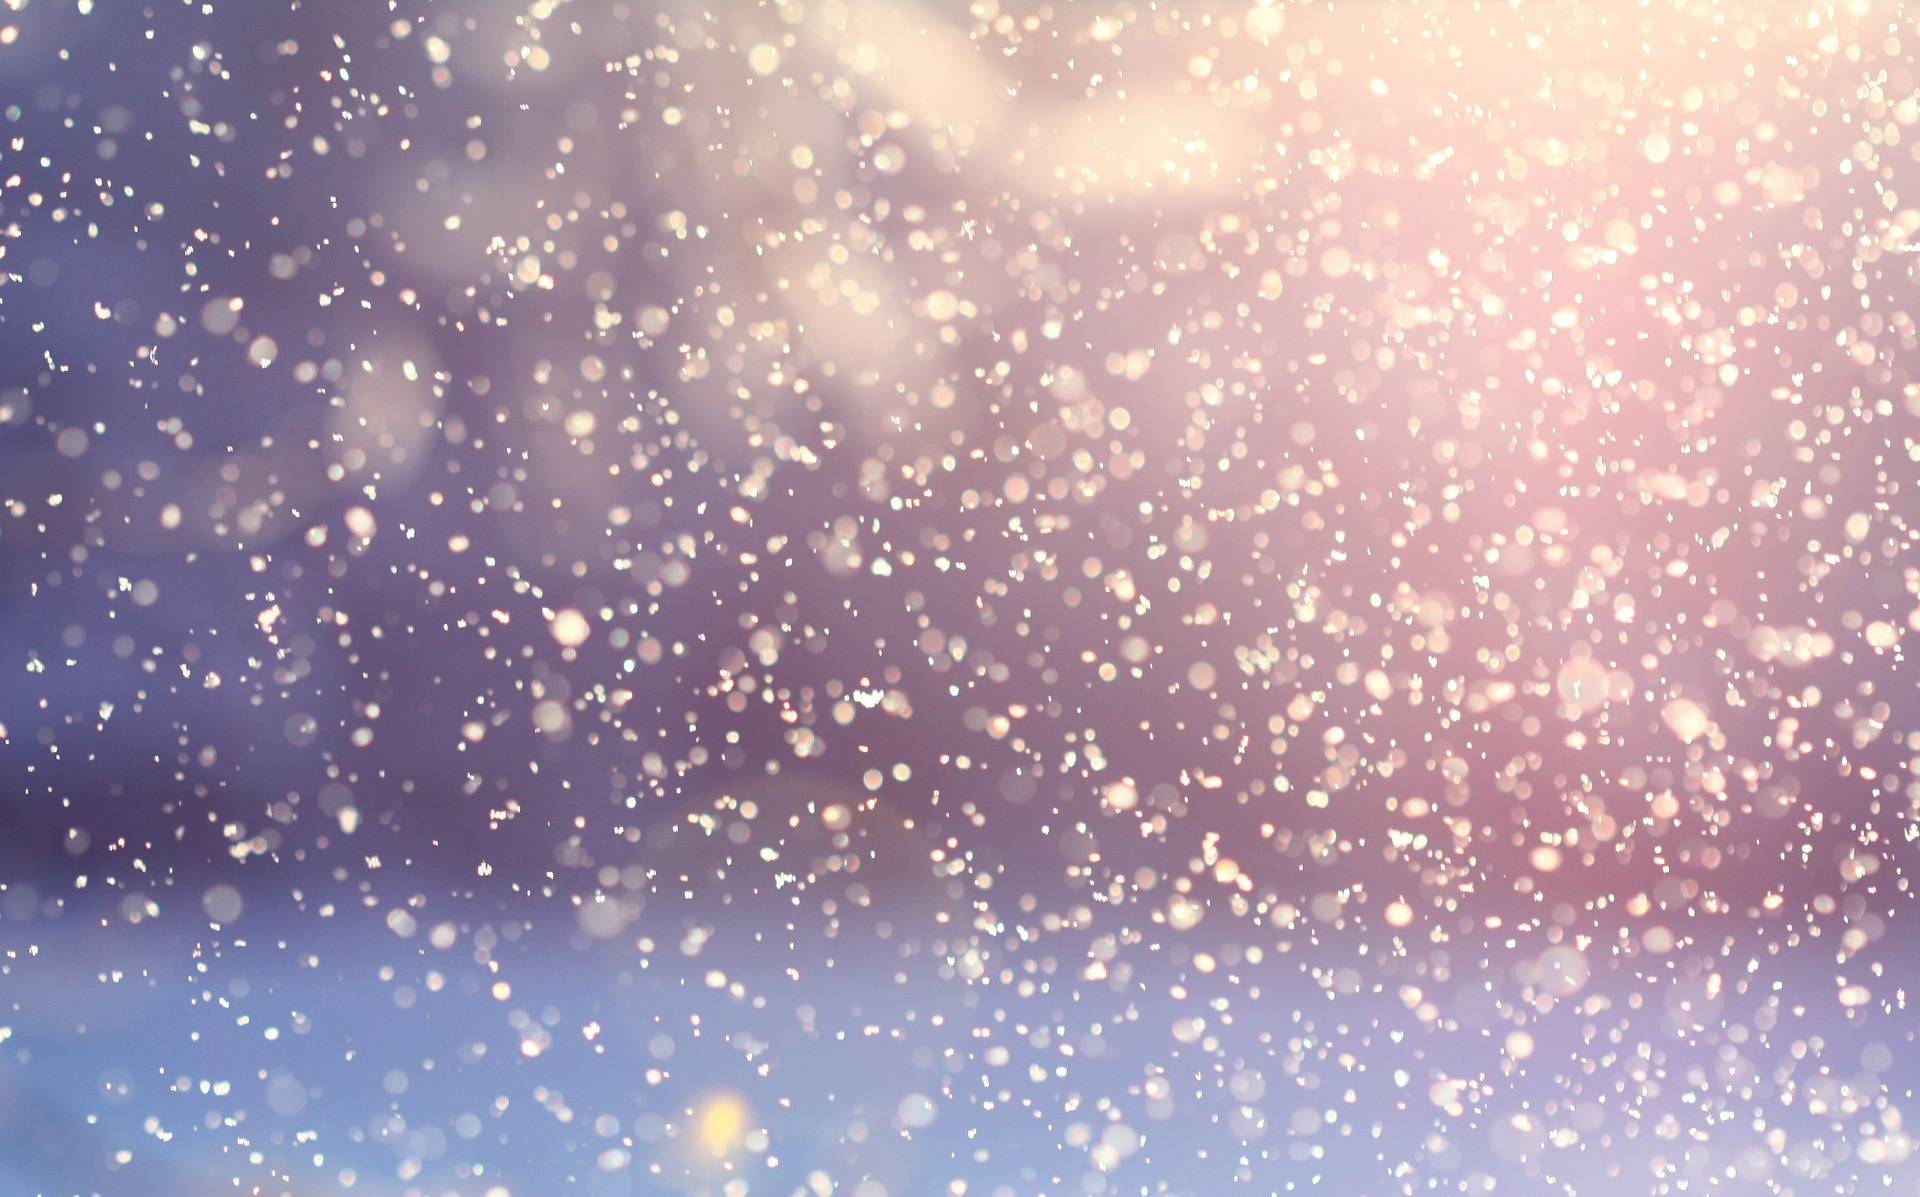 snowfall-201496_1920.jpg